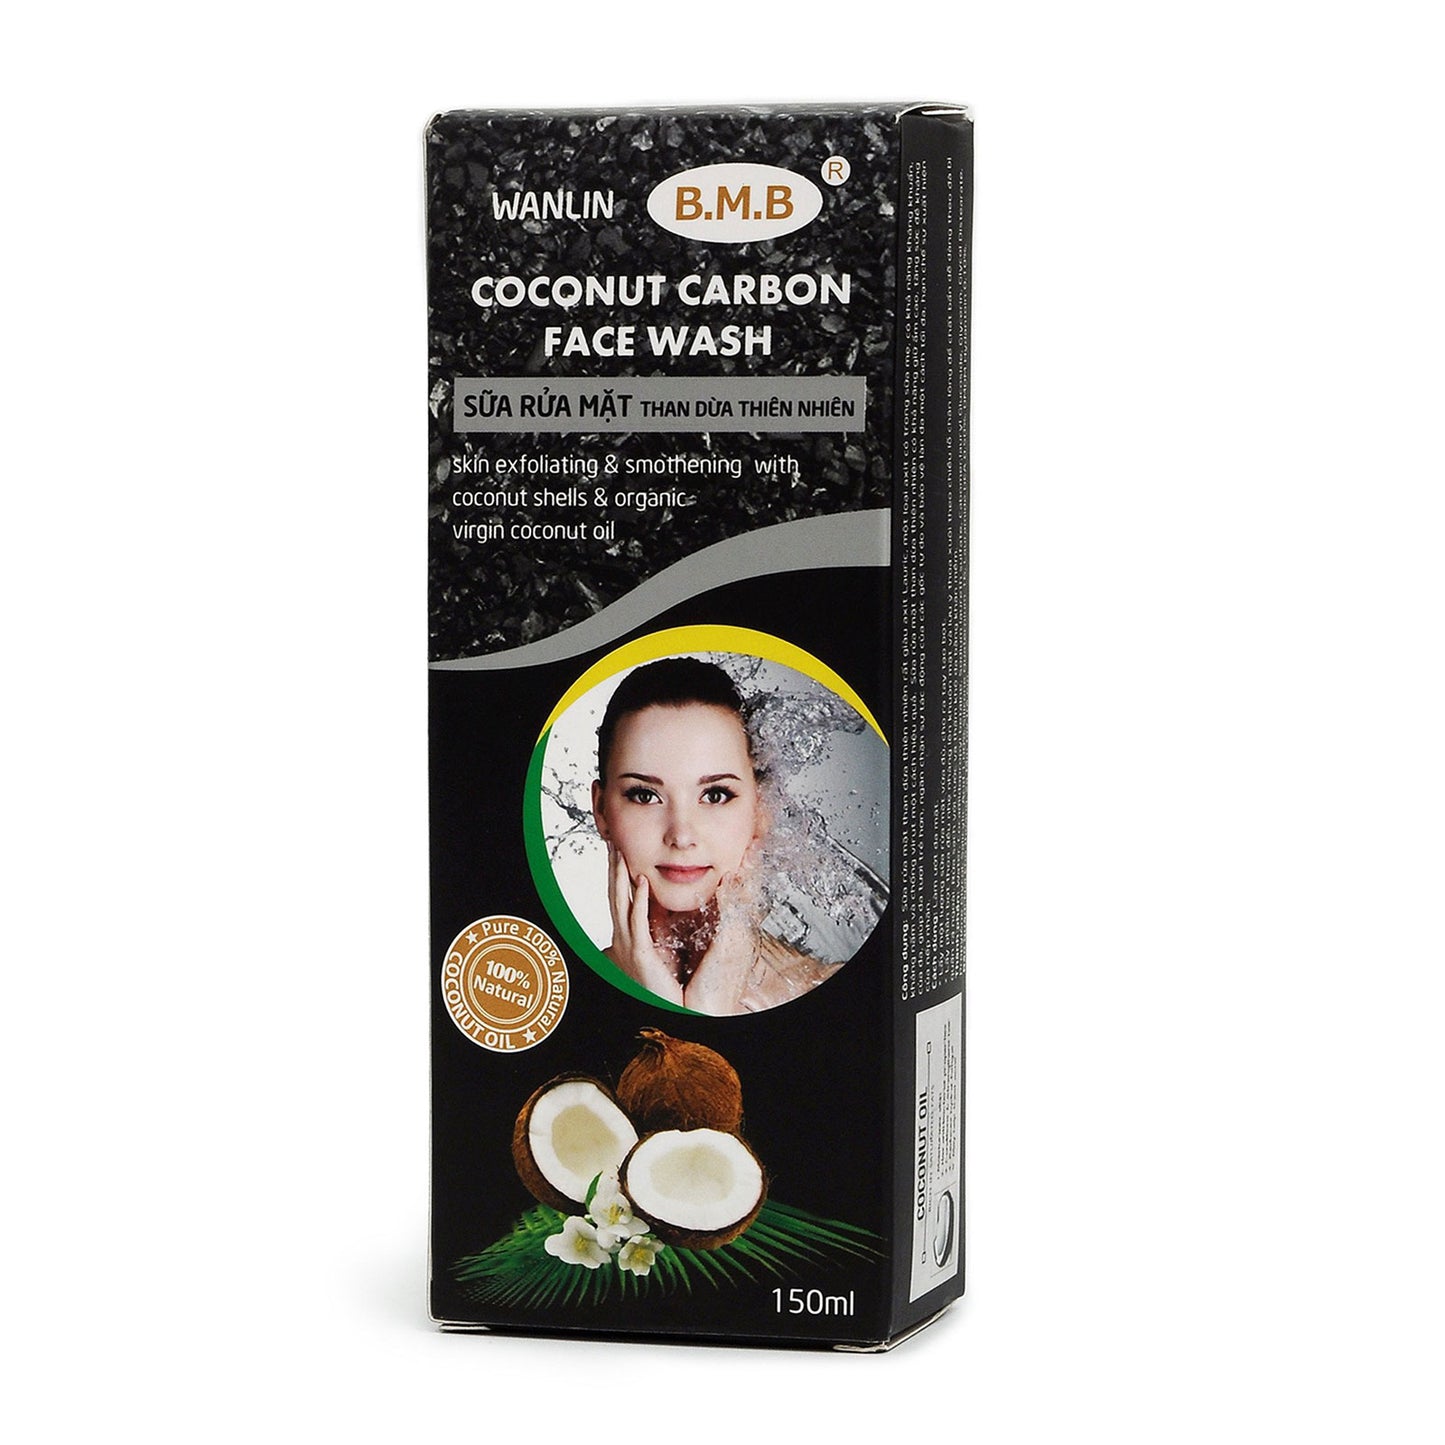 B.M.B Coconut Carbon Face Wash – Pure 100% Natural Coconut Oil